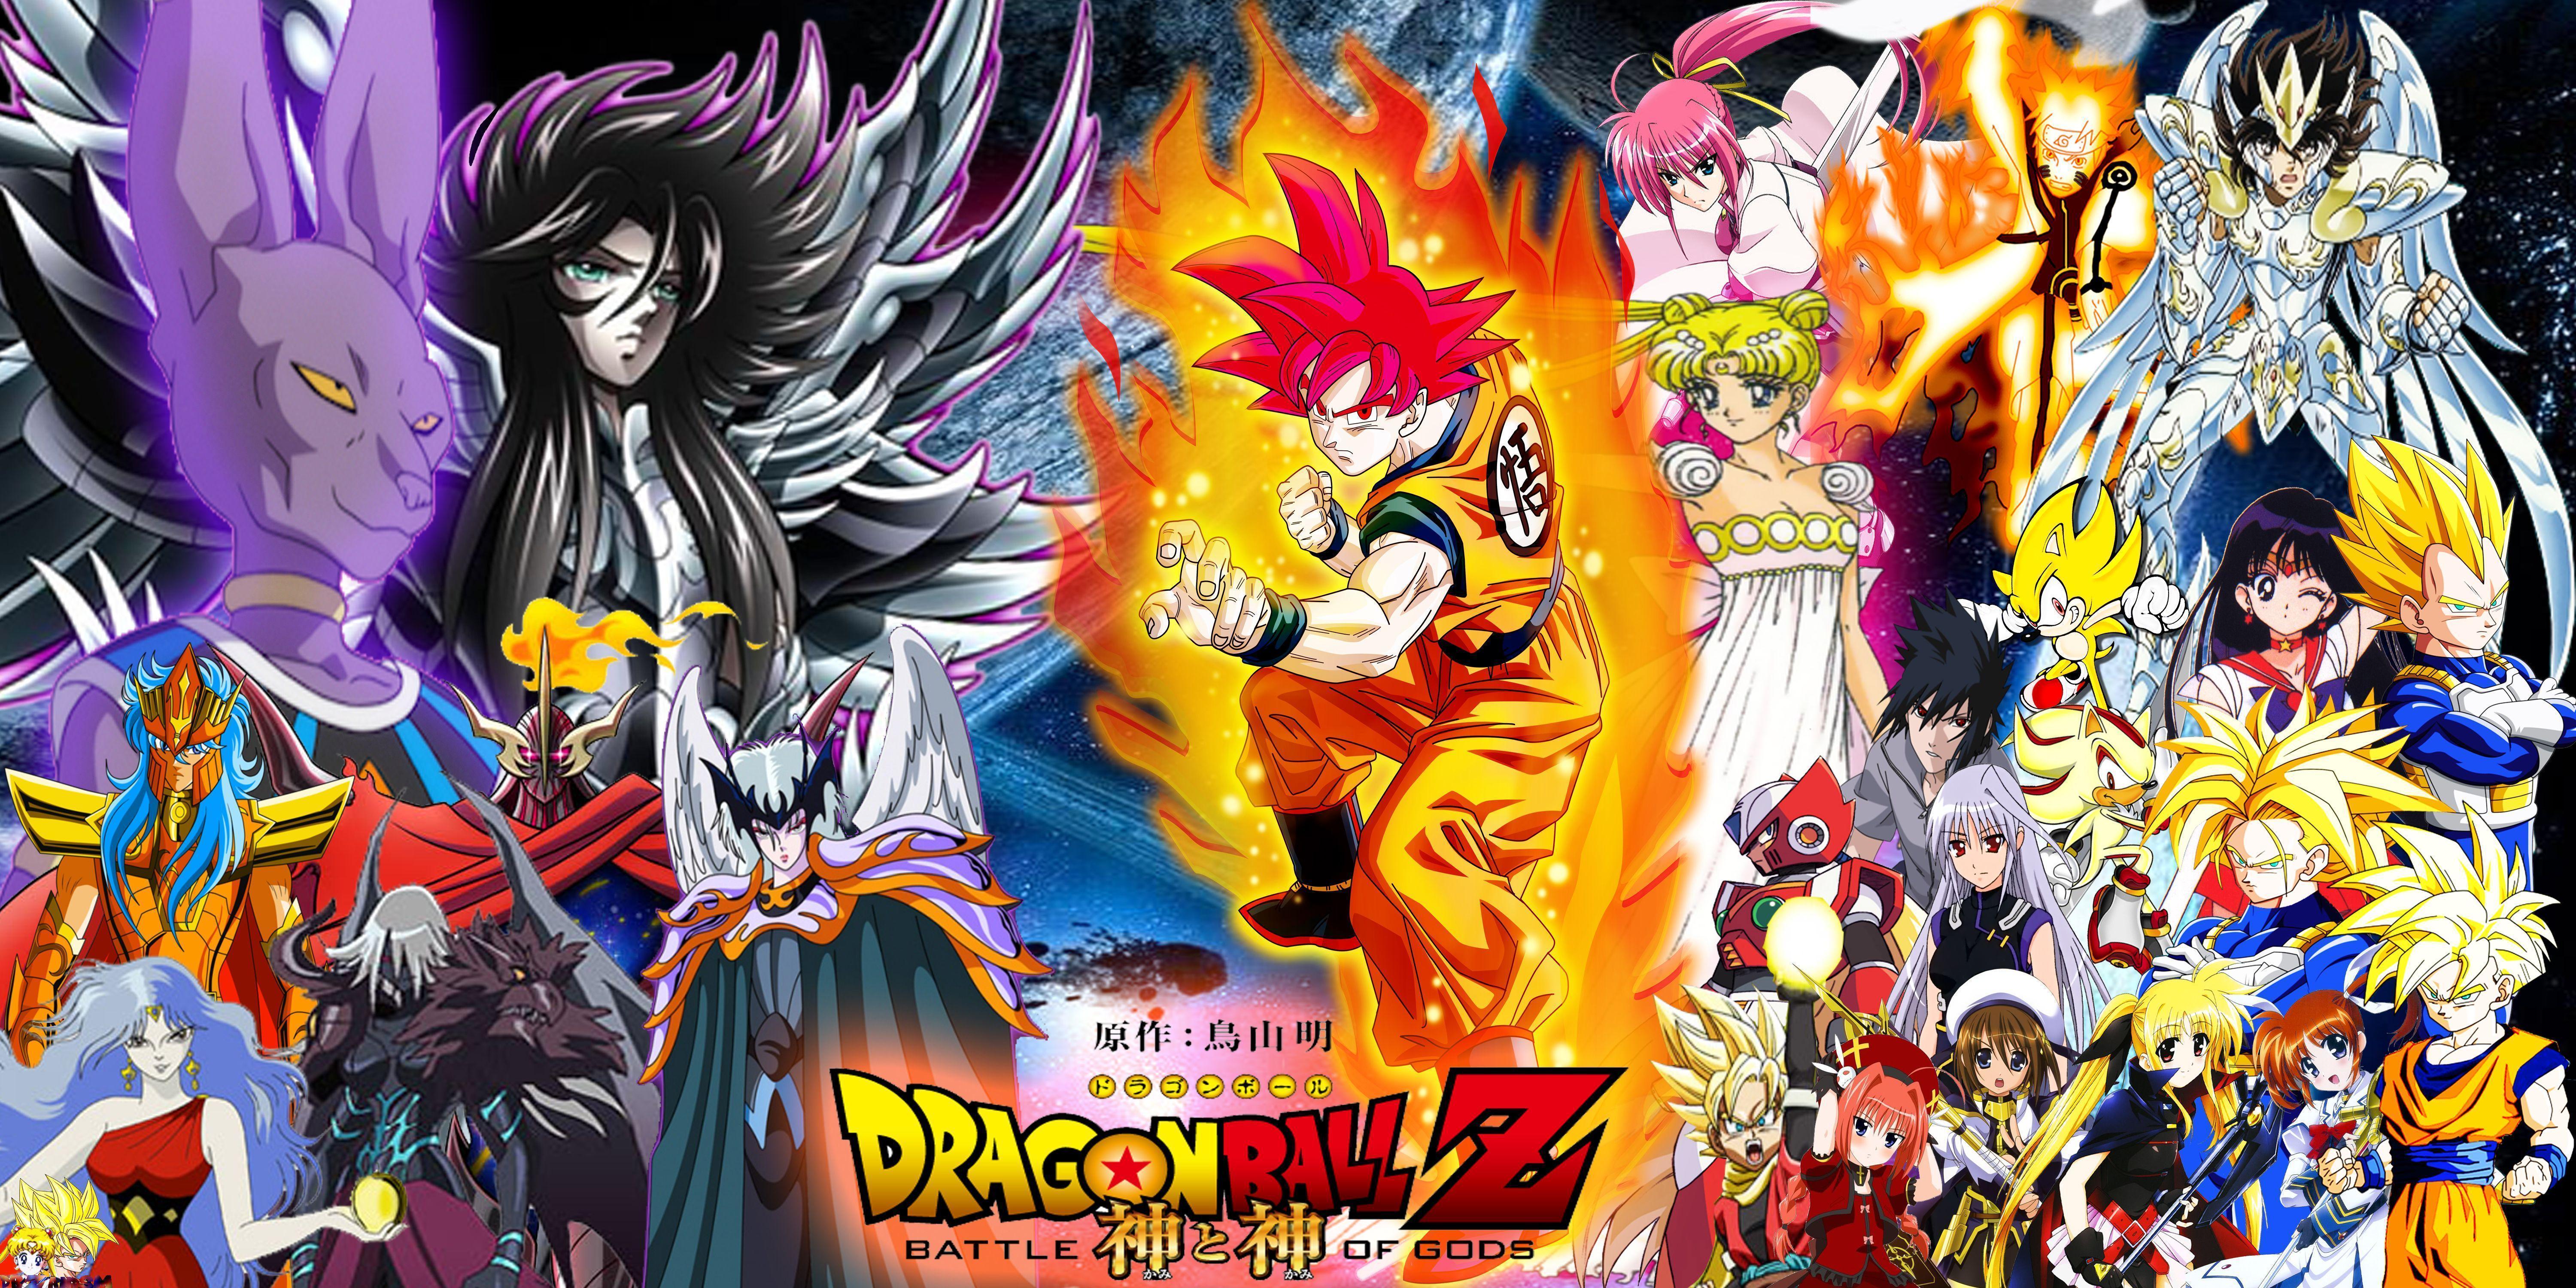 Dragon Ball Z Crossover HD Wallpaper. Projetos a experimentar